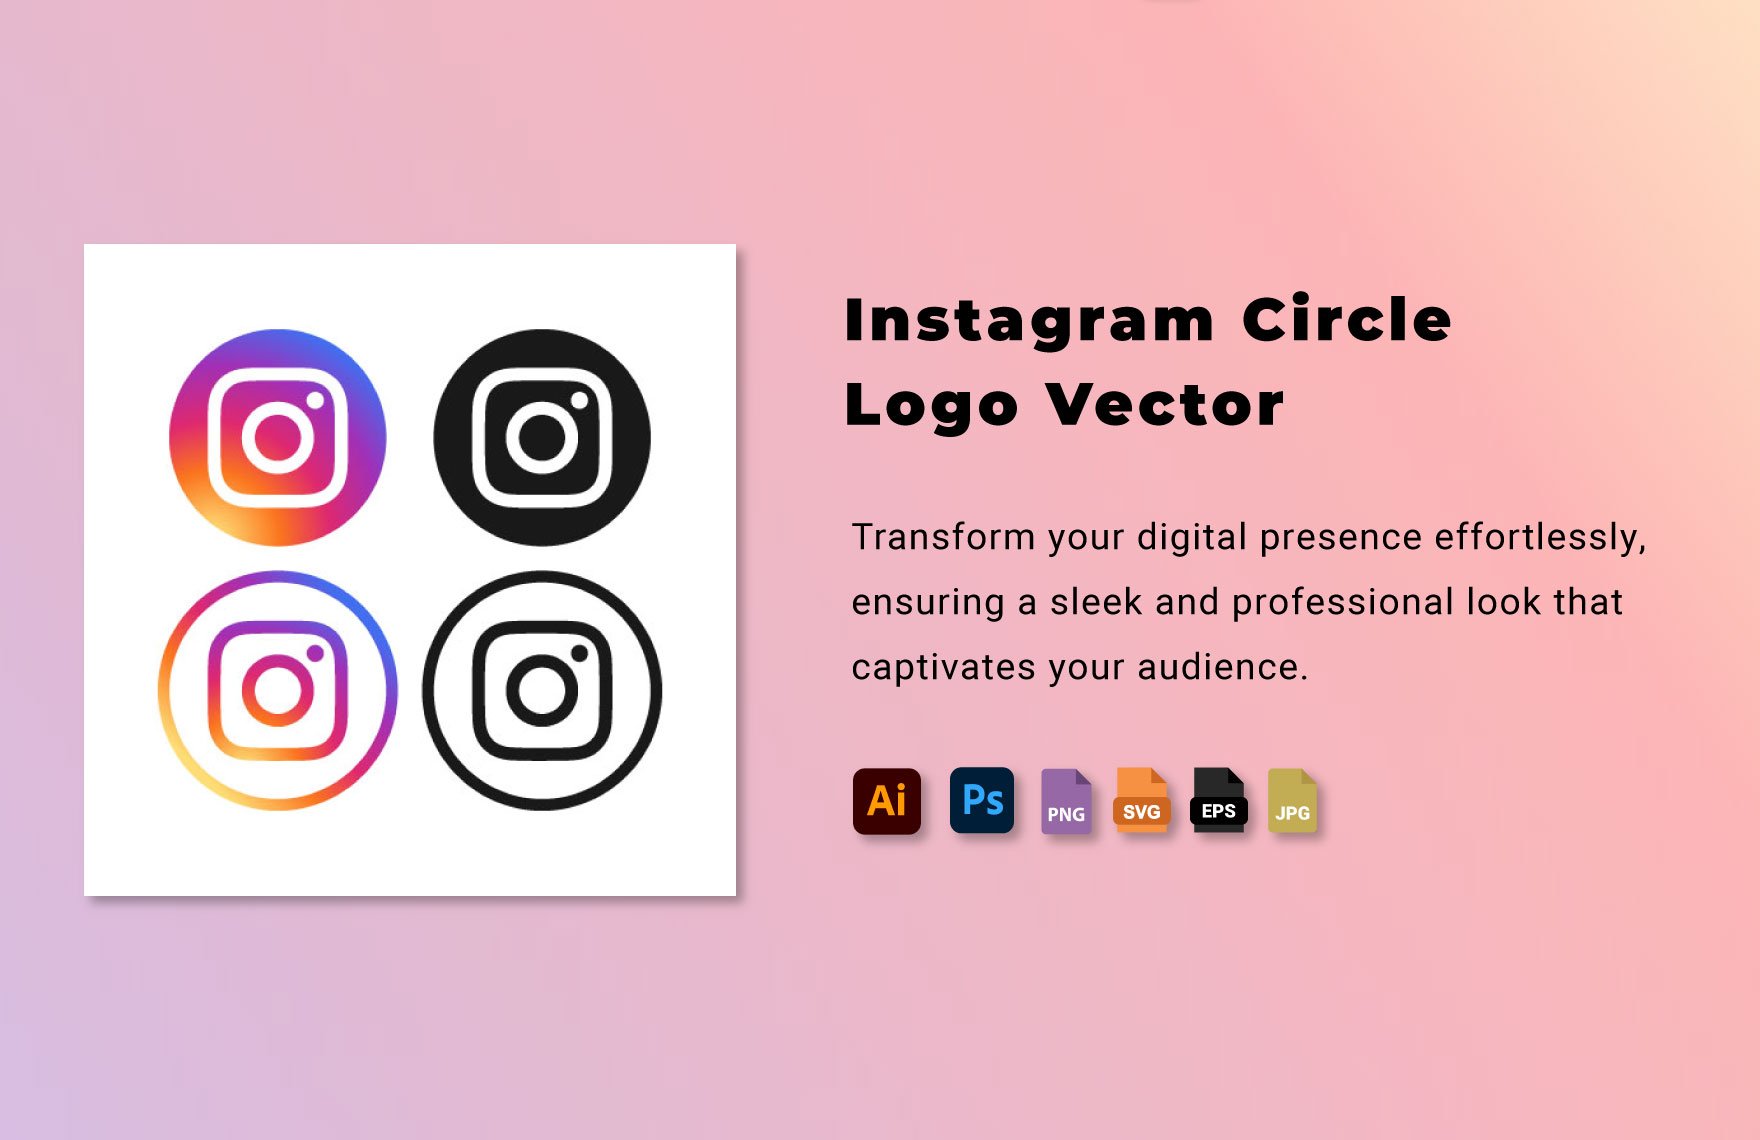 Instagram Circle Logo Vector in Illustrator, PSD, EPS, SVG, JPG, PNG